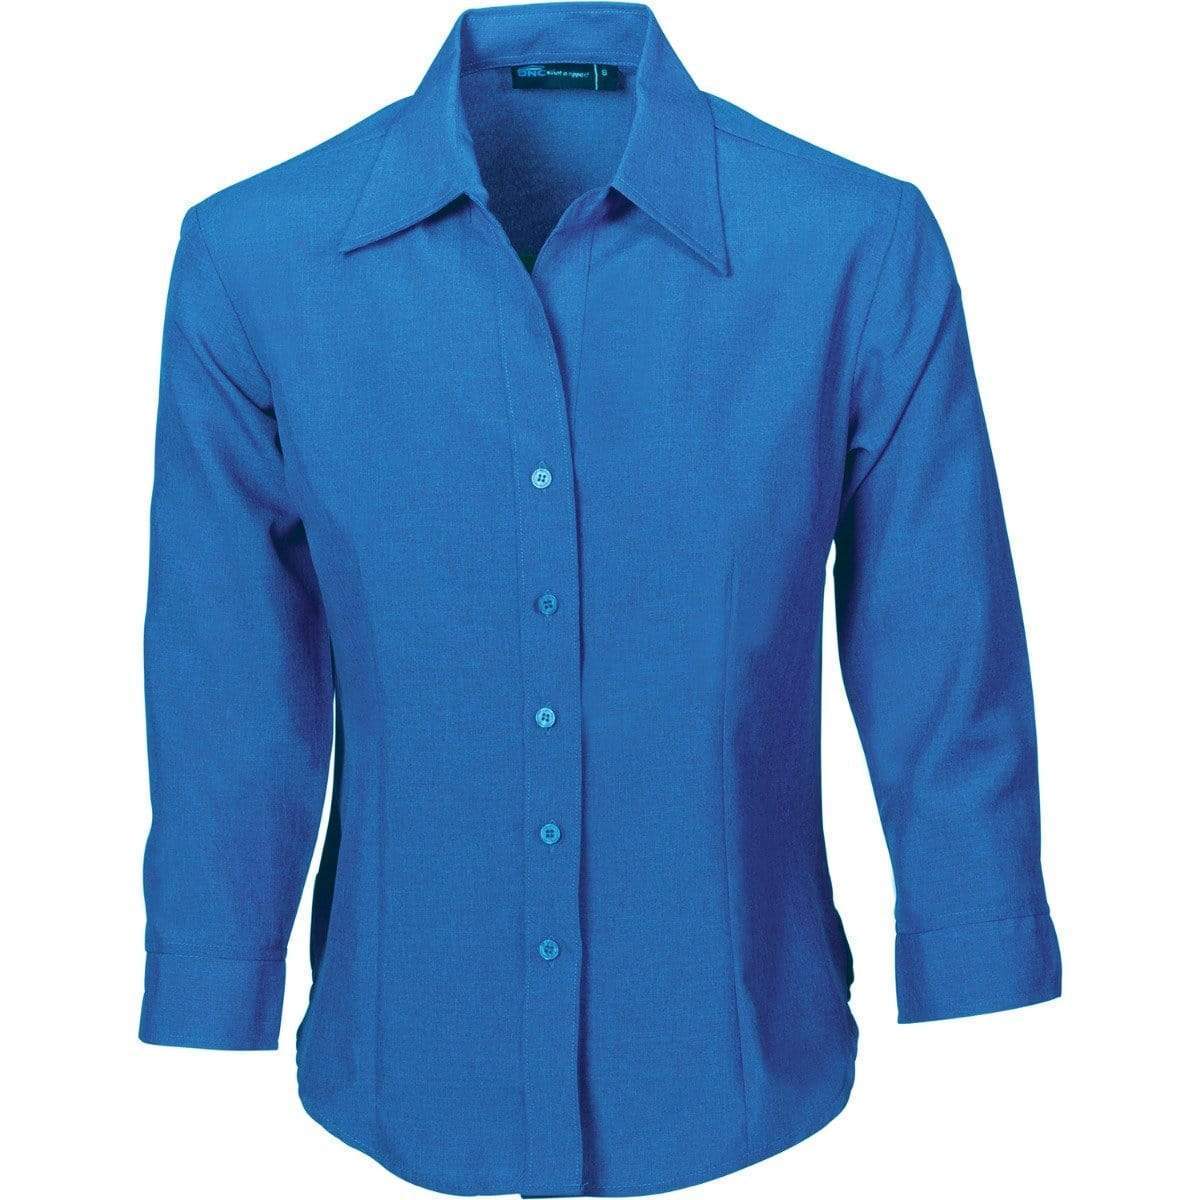 Dnc Workwear Ladies Cool-breathe 3/4 Sleeve Shirt - 4238 Corporate Wear DNC Workwear Royal Blue 6 